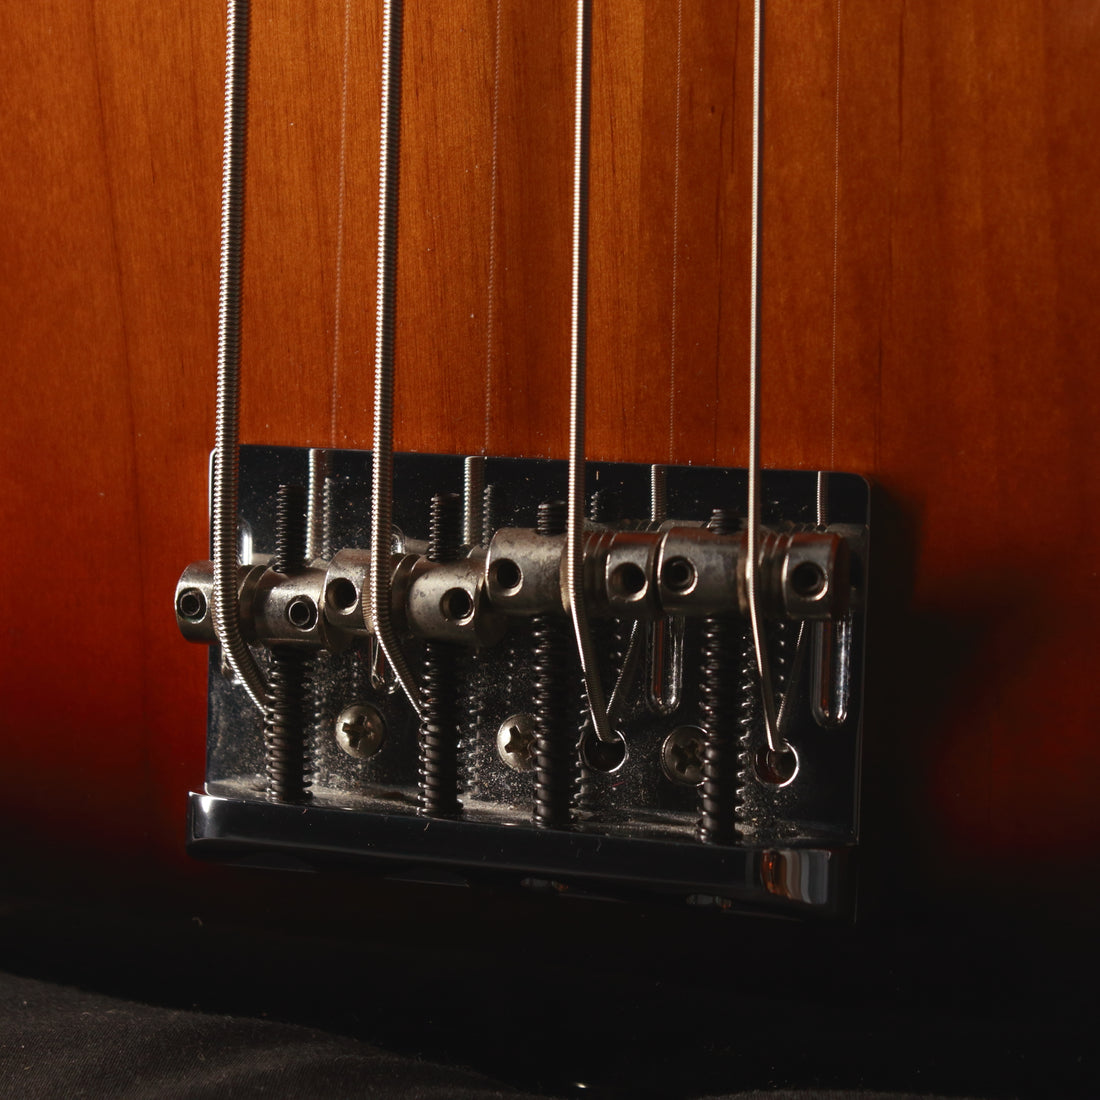 Fender American Professional Precision Bass Sunburst 2017